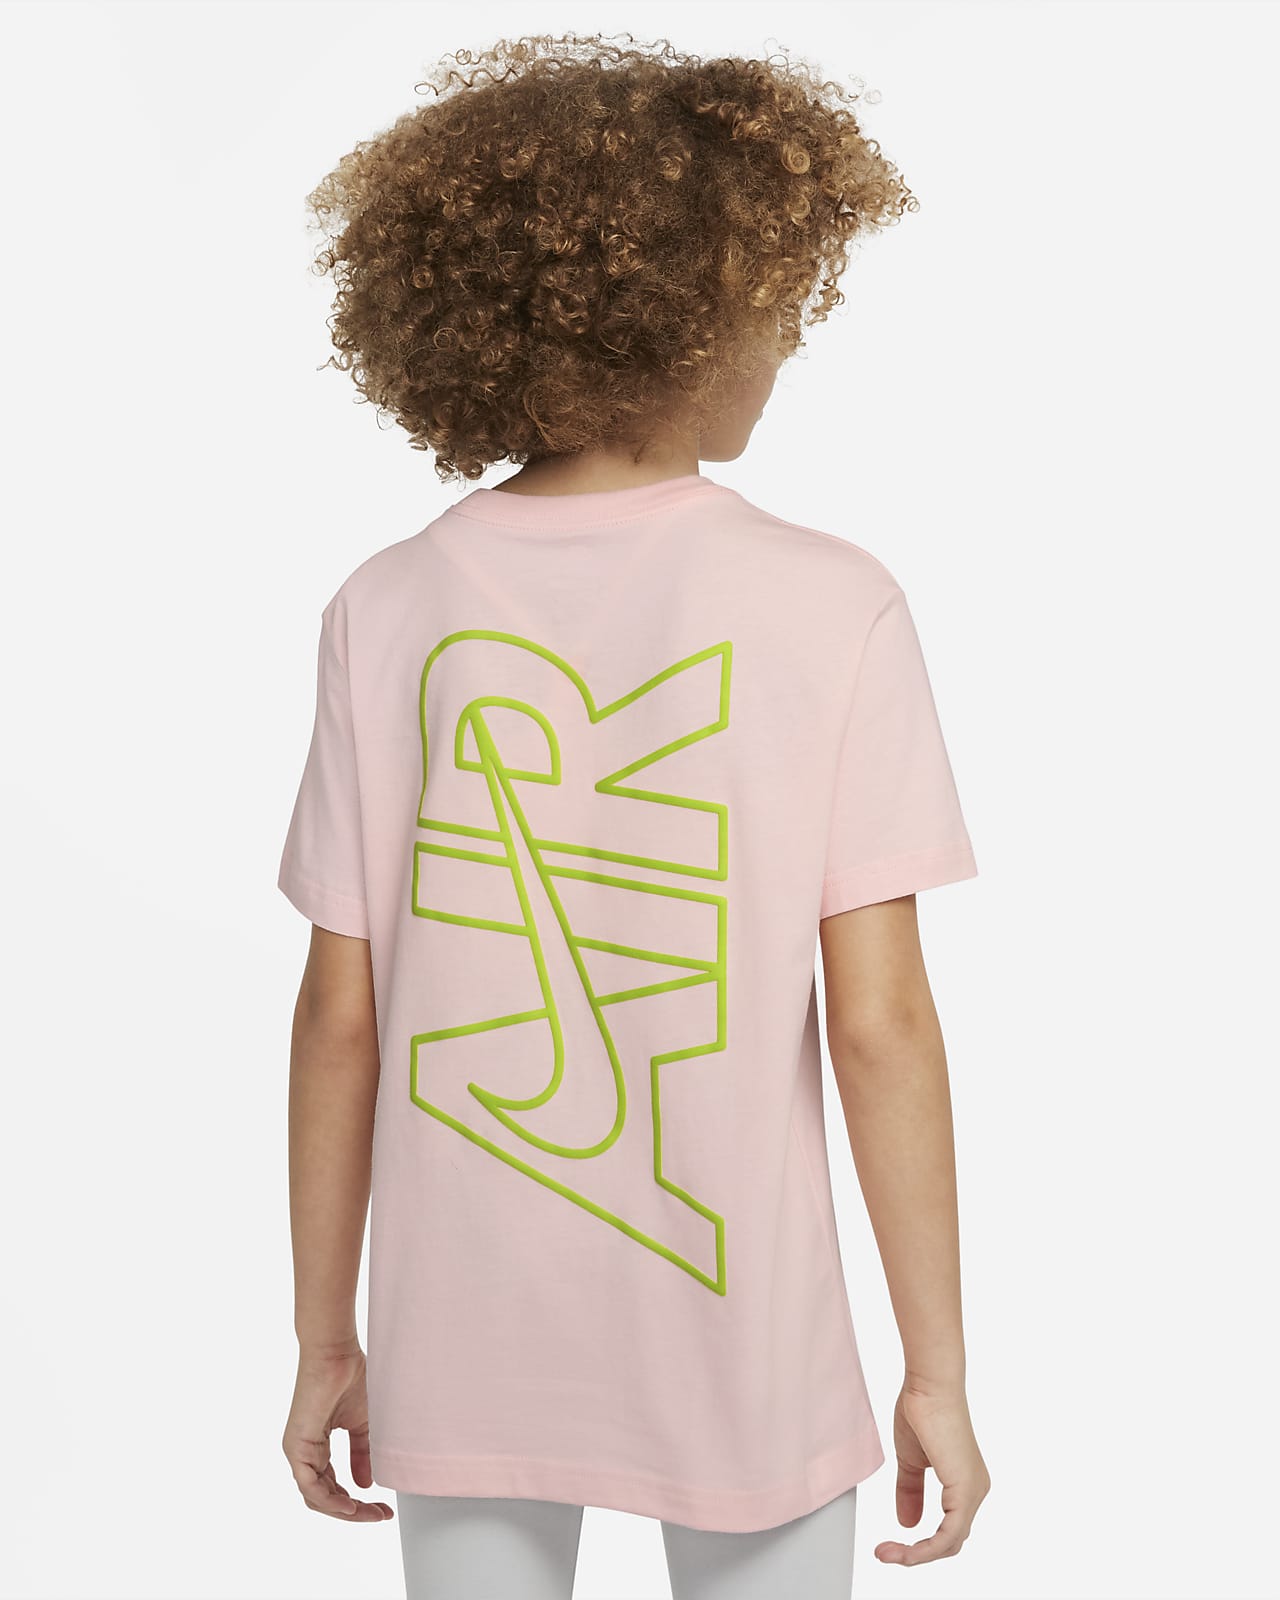 Nike Air Kids' (Girls') Nike.com